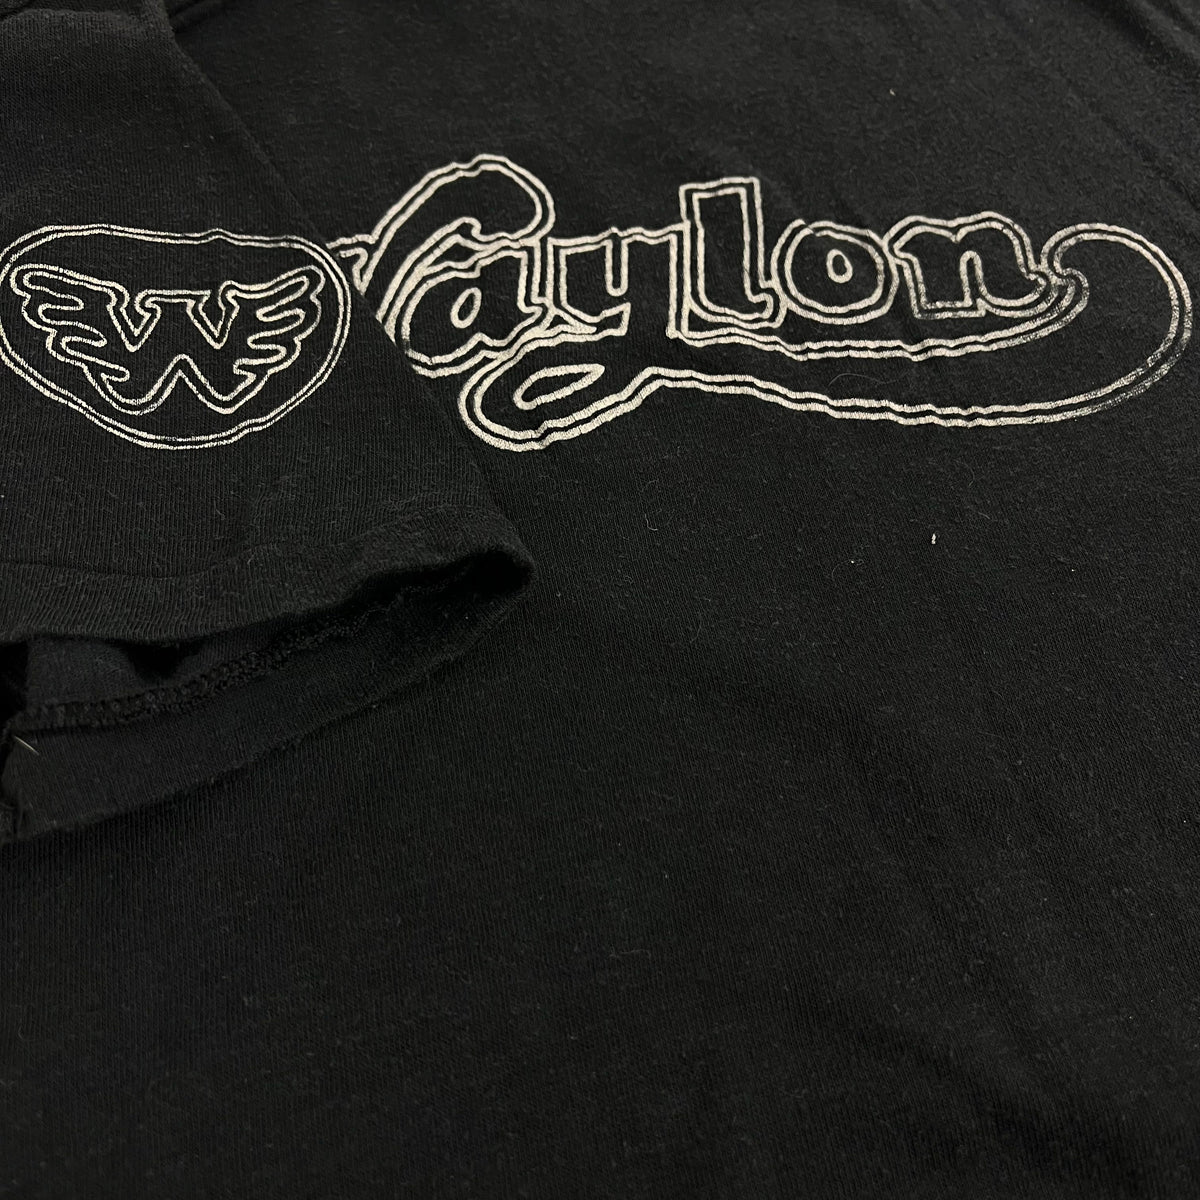 Vintage Waylon Jennings &quot;Flying W&quot; T-Shirt